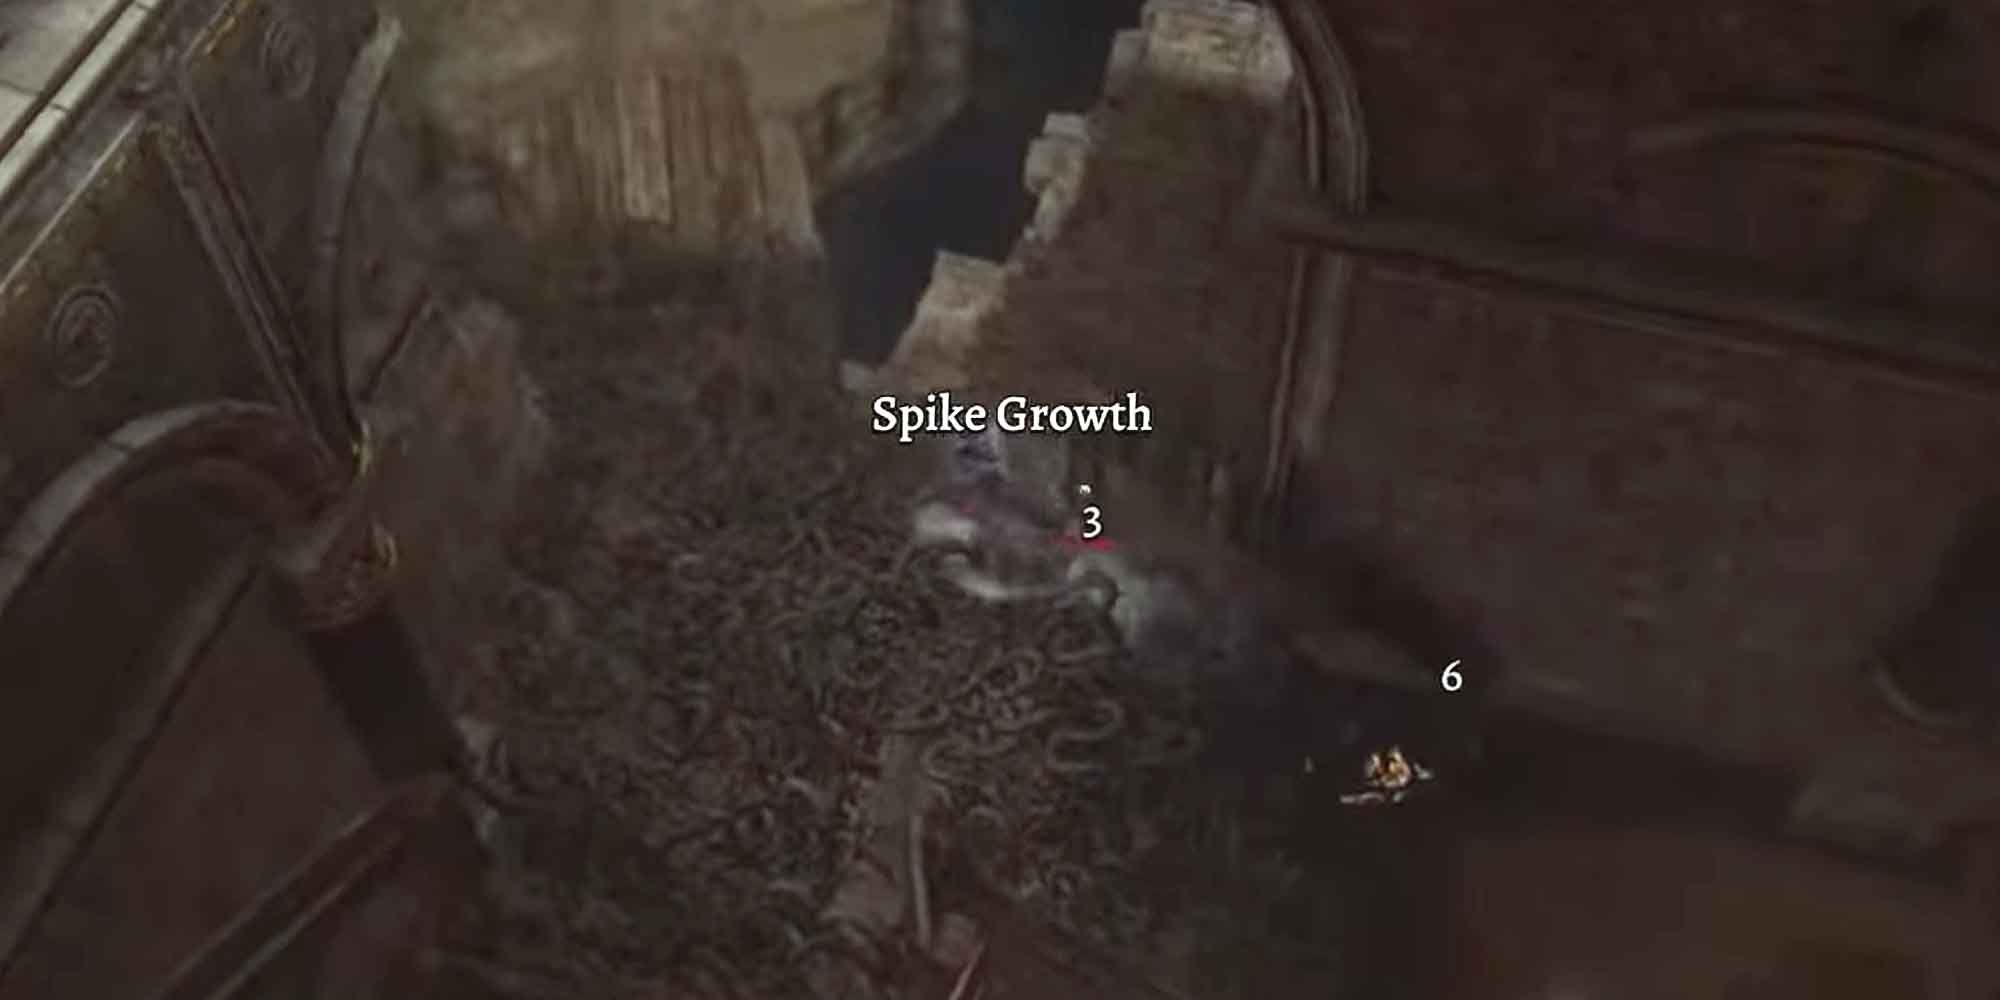 Using Spike Growth on a group of kobolds in Baldur's Gate 3